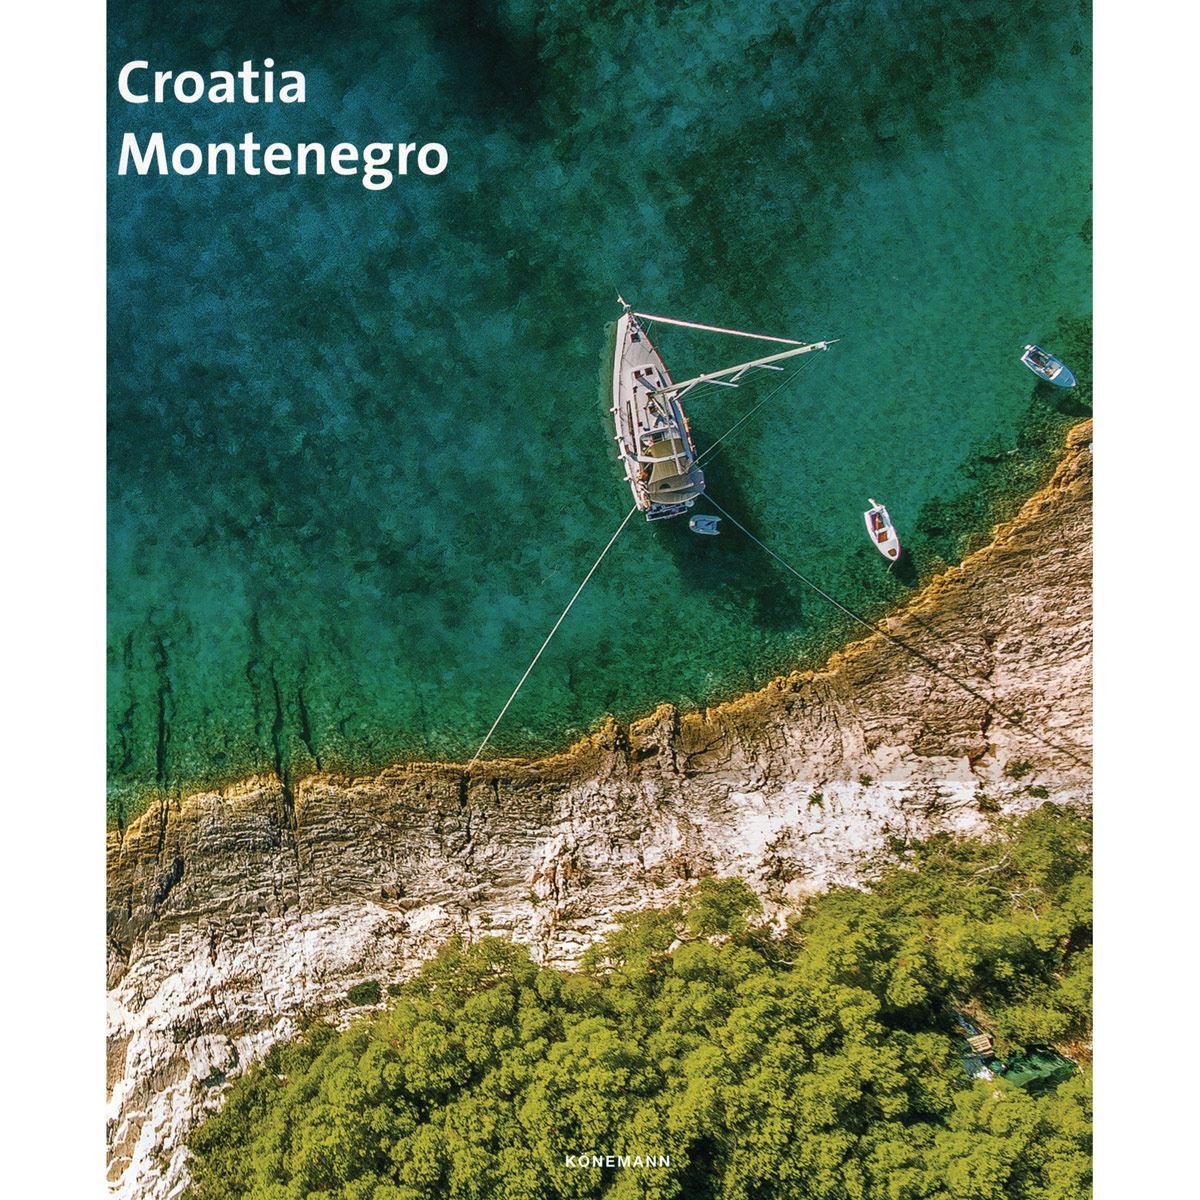 Croatia and Montenegro